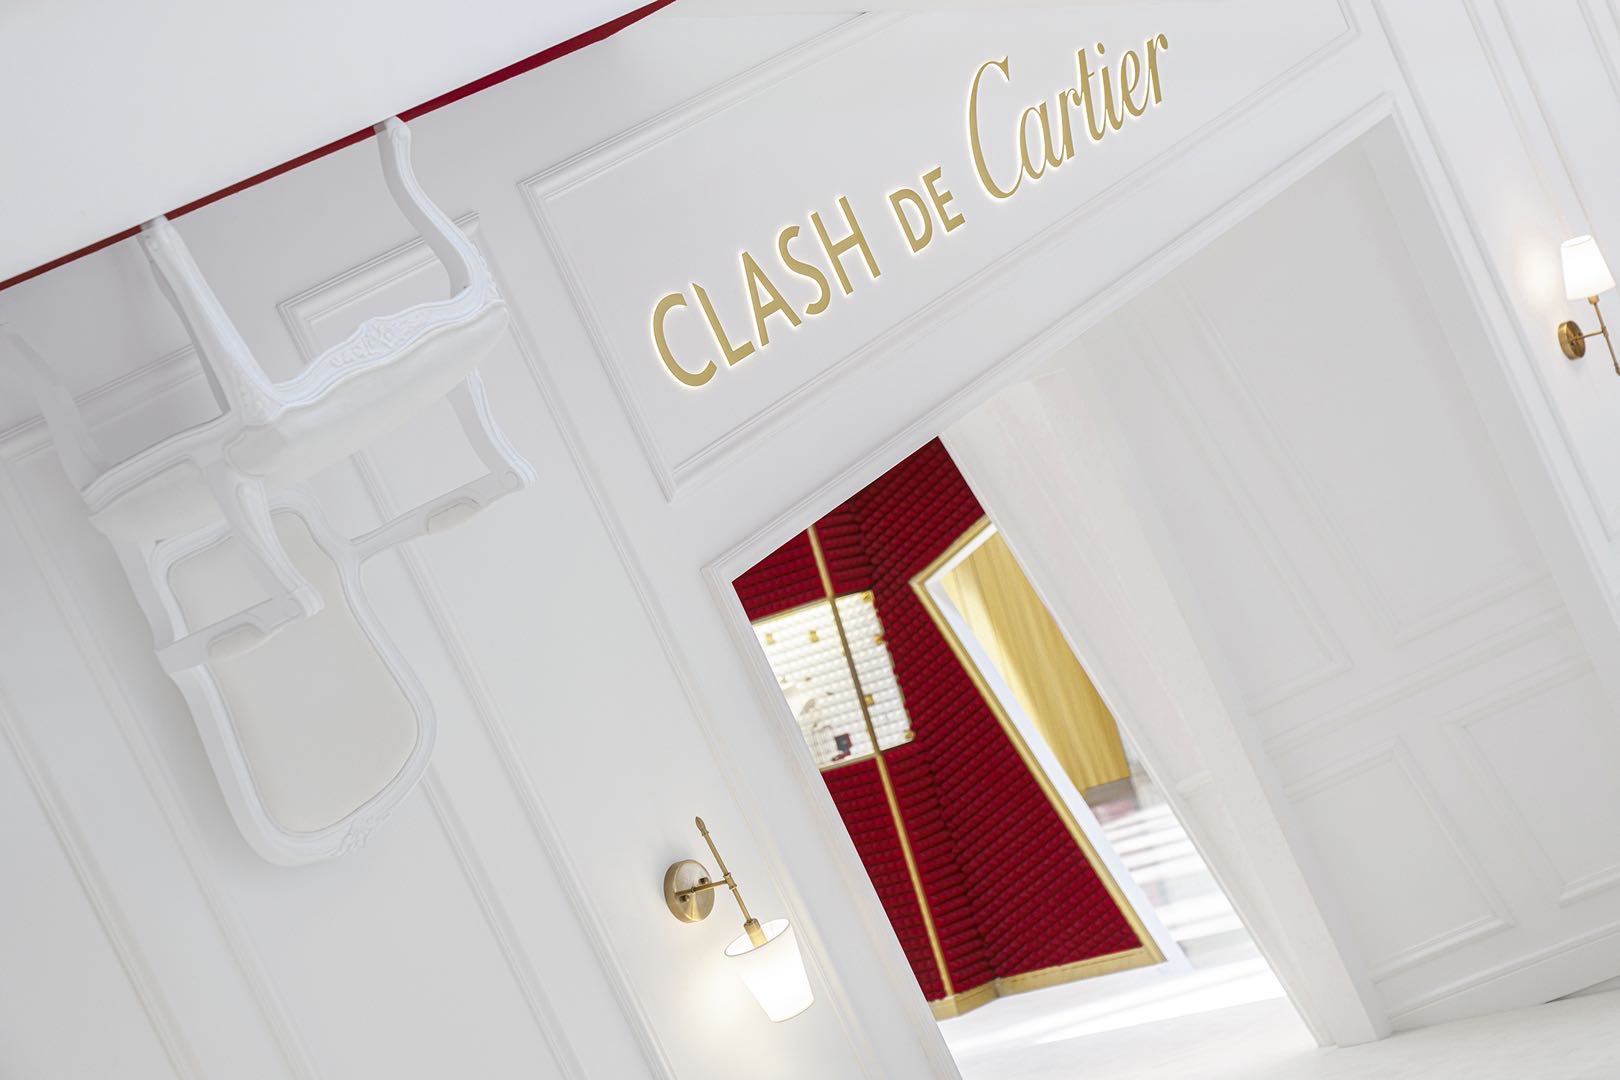 CLASH DE Cartier Shanghai May 19th – 21st 2020 – 3